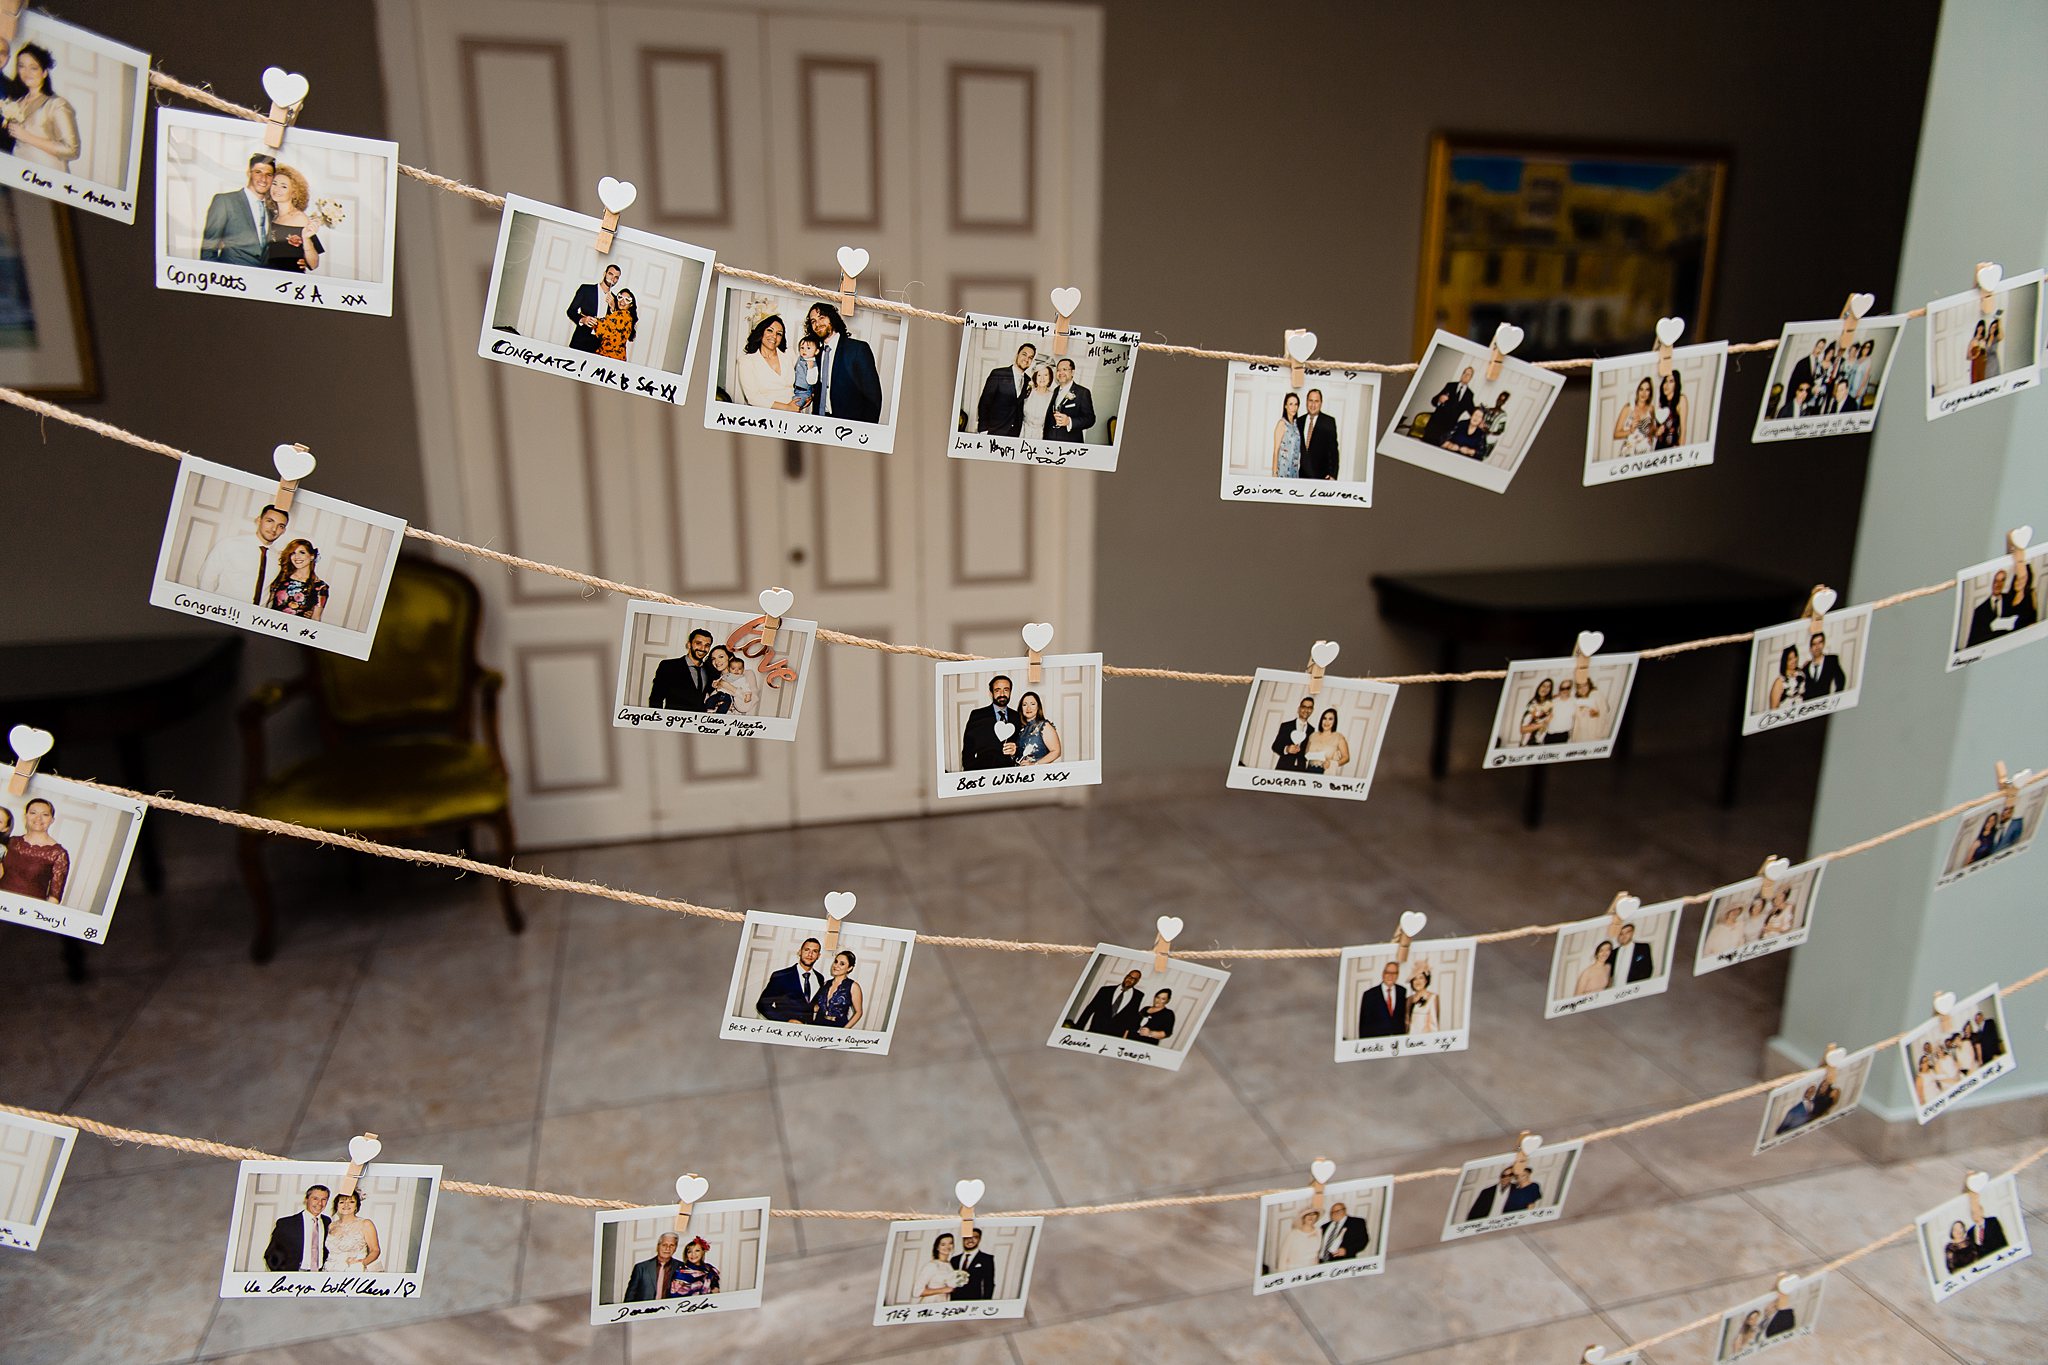 Analise & Darryl | The Xara Lodge | Wedding Photography Malta | Shane P. Watts